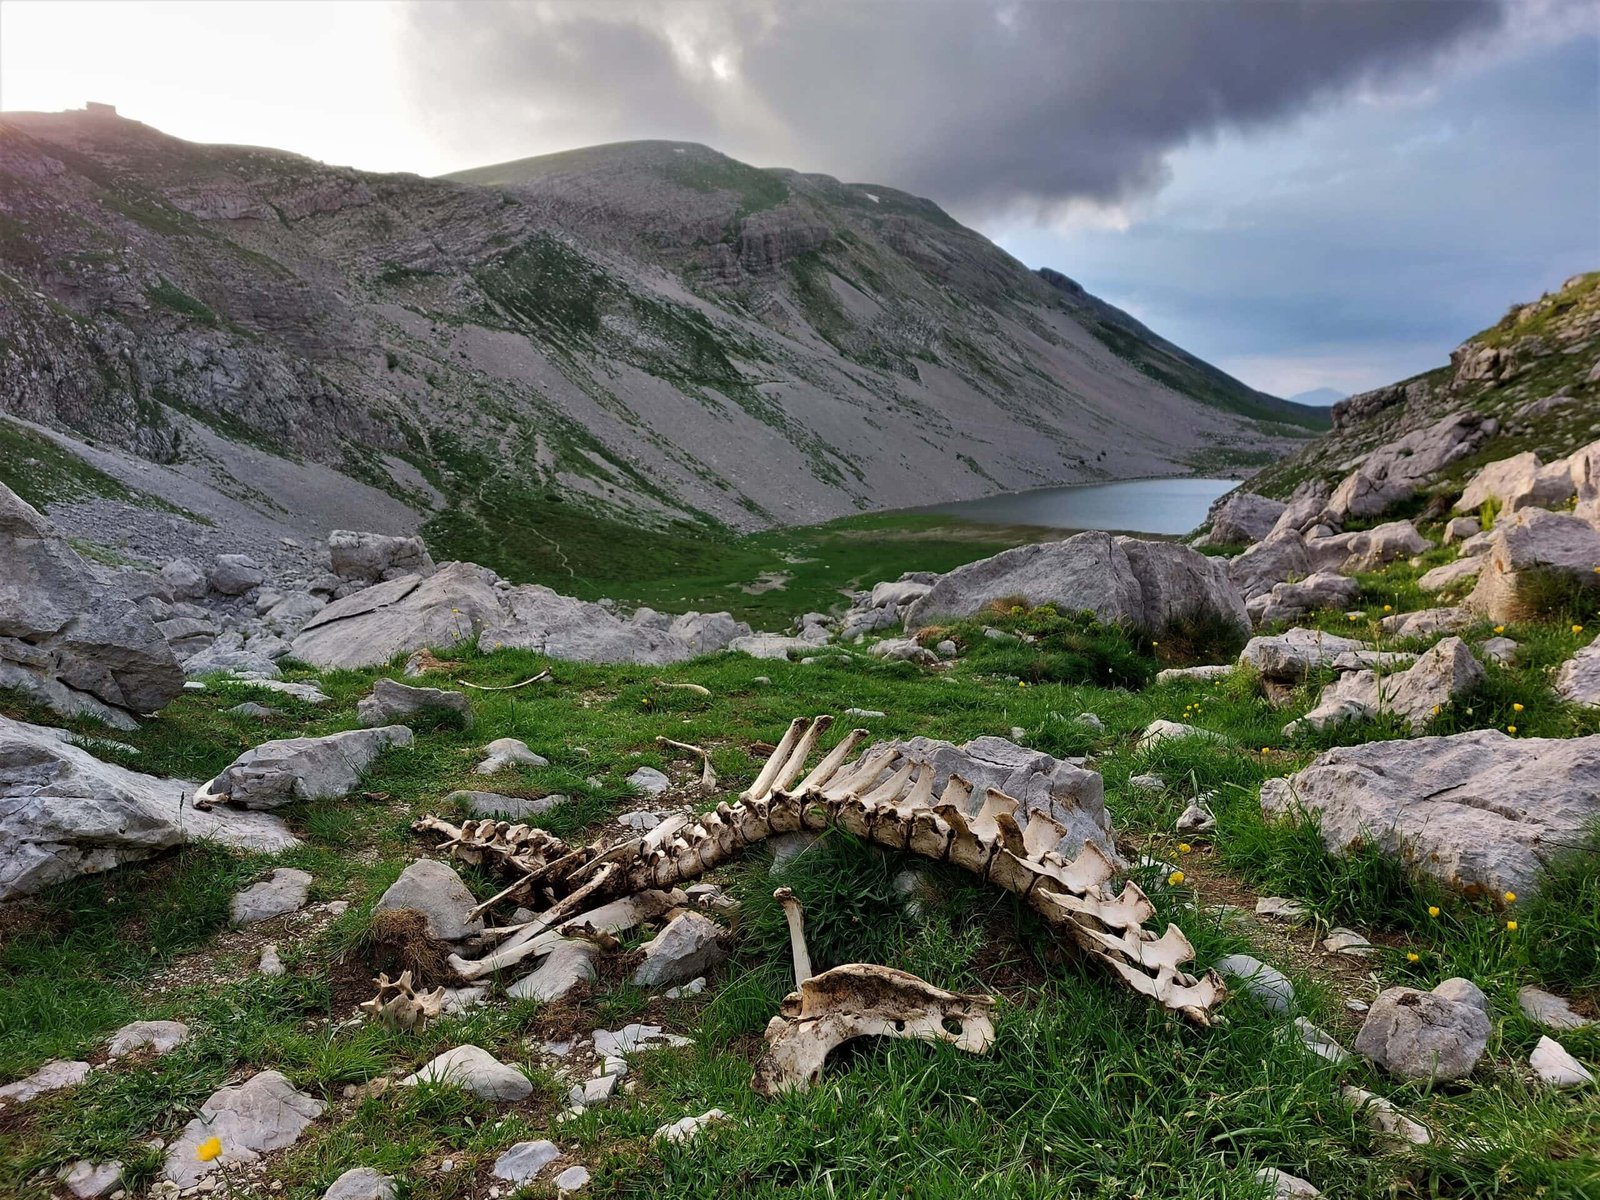 a cow skeleton lies between rocks overlooking an alpine lake